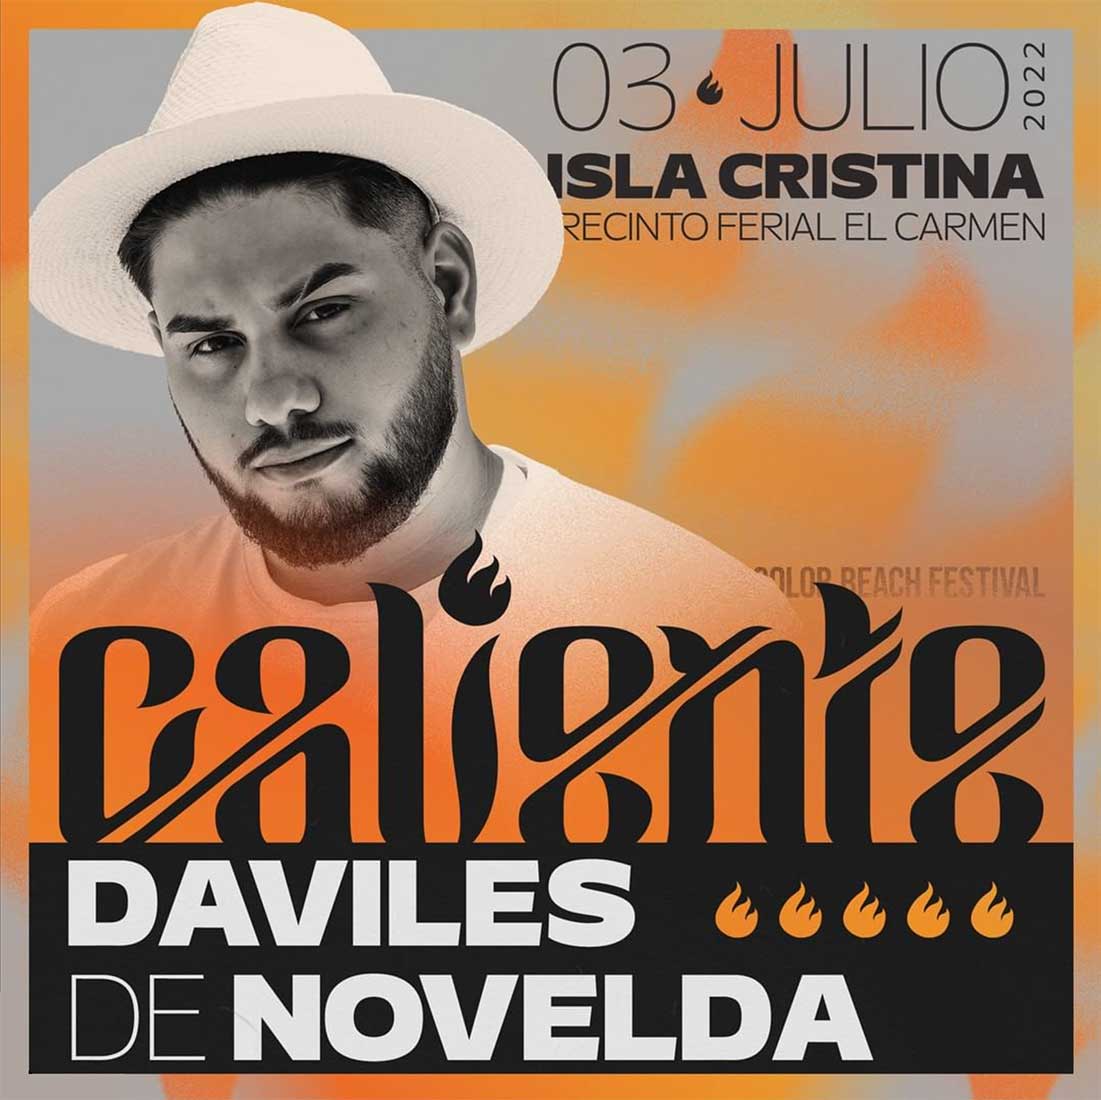 Caliente festival Daviles de novelda 3 de julio Isla Cristina